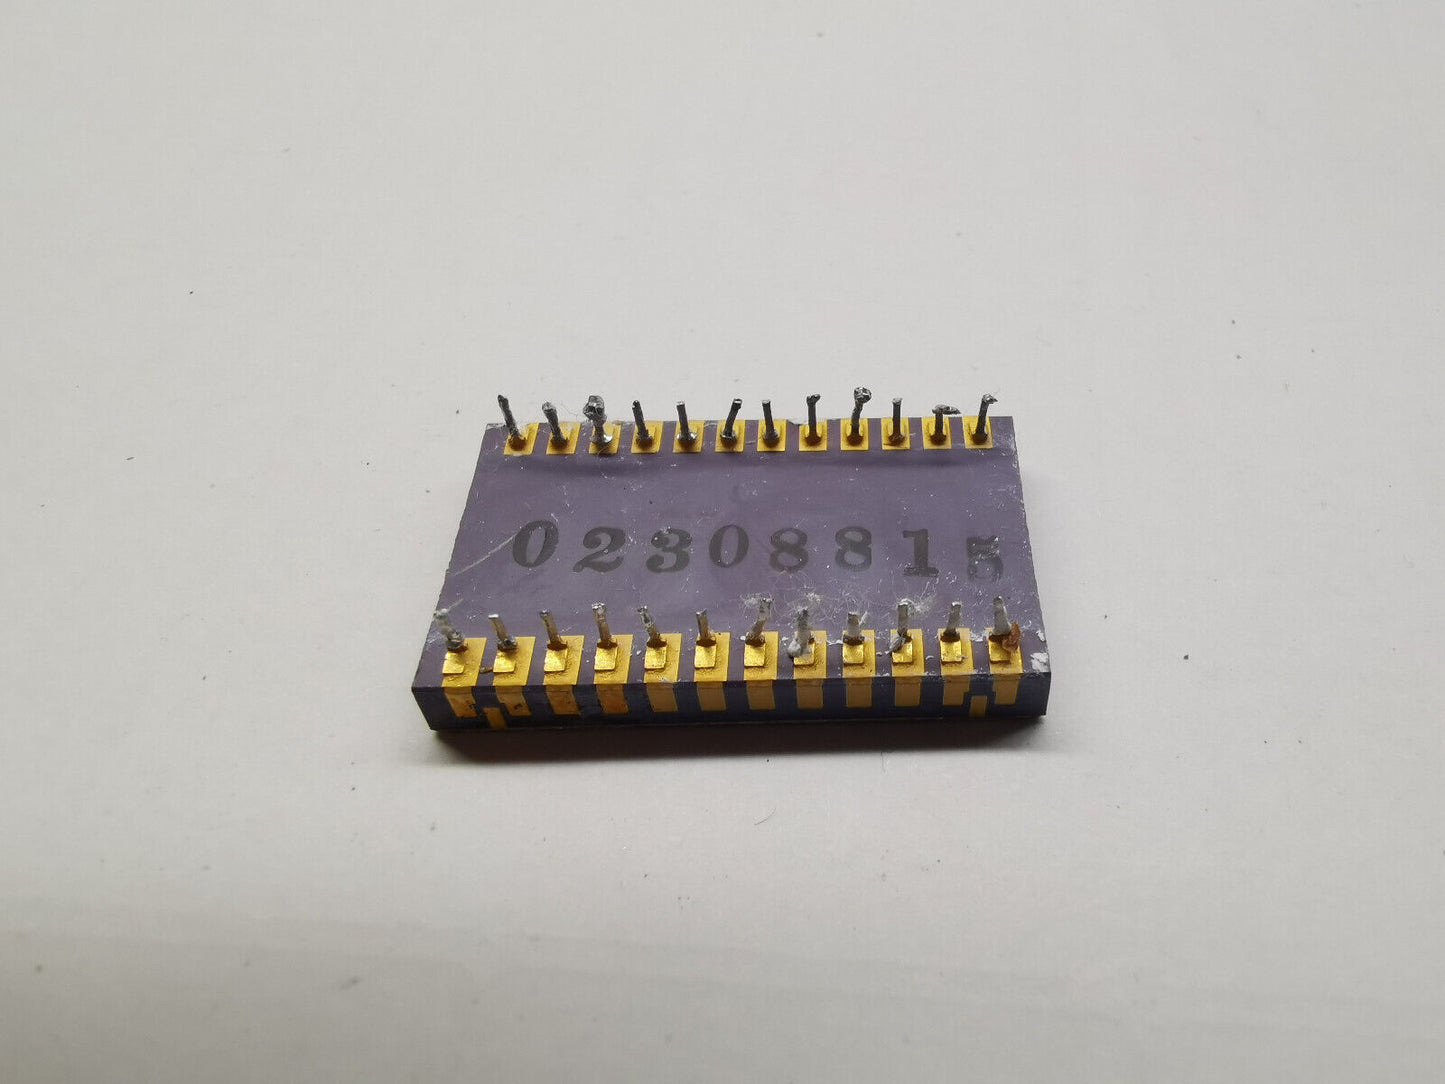 Genuine Datel SHM-4860MC High Speed ±0.01% Sample Hold Amplifier